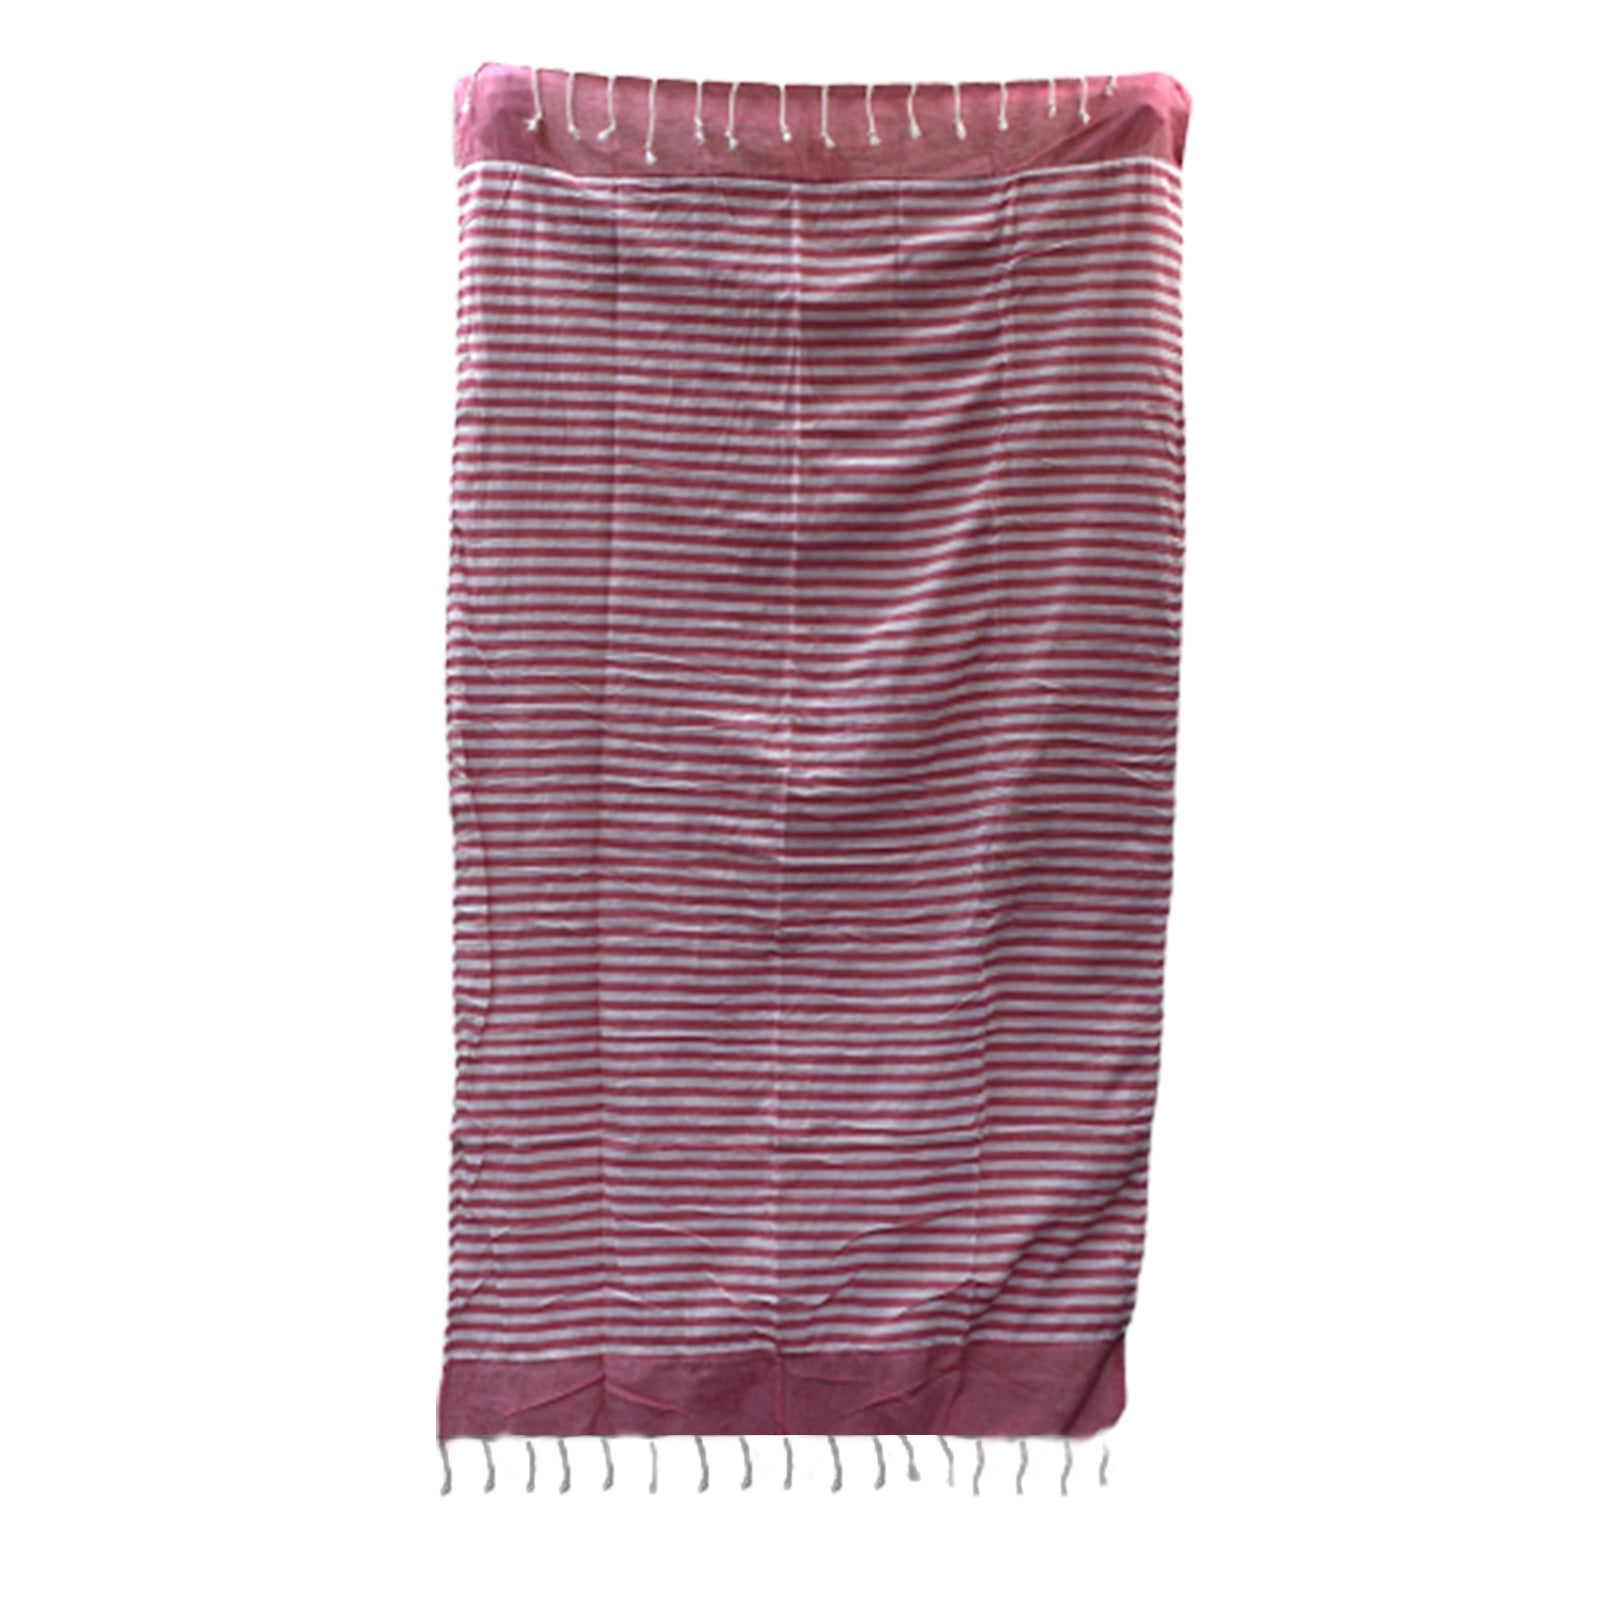 Cotton Pario Throw - 100x180 cm - Hot Pink - Kaftans direct